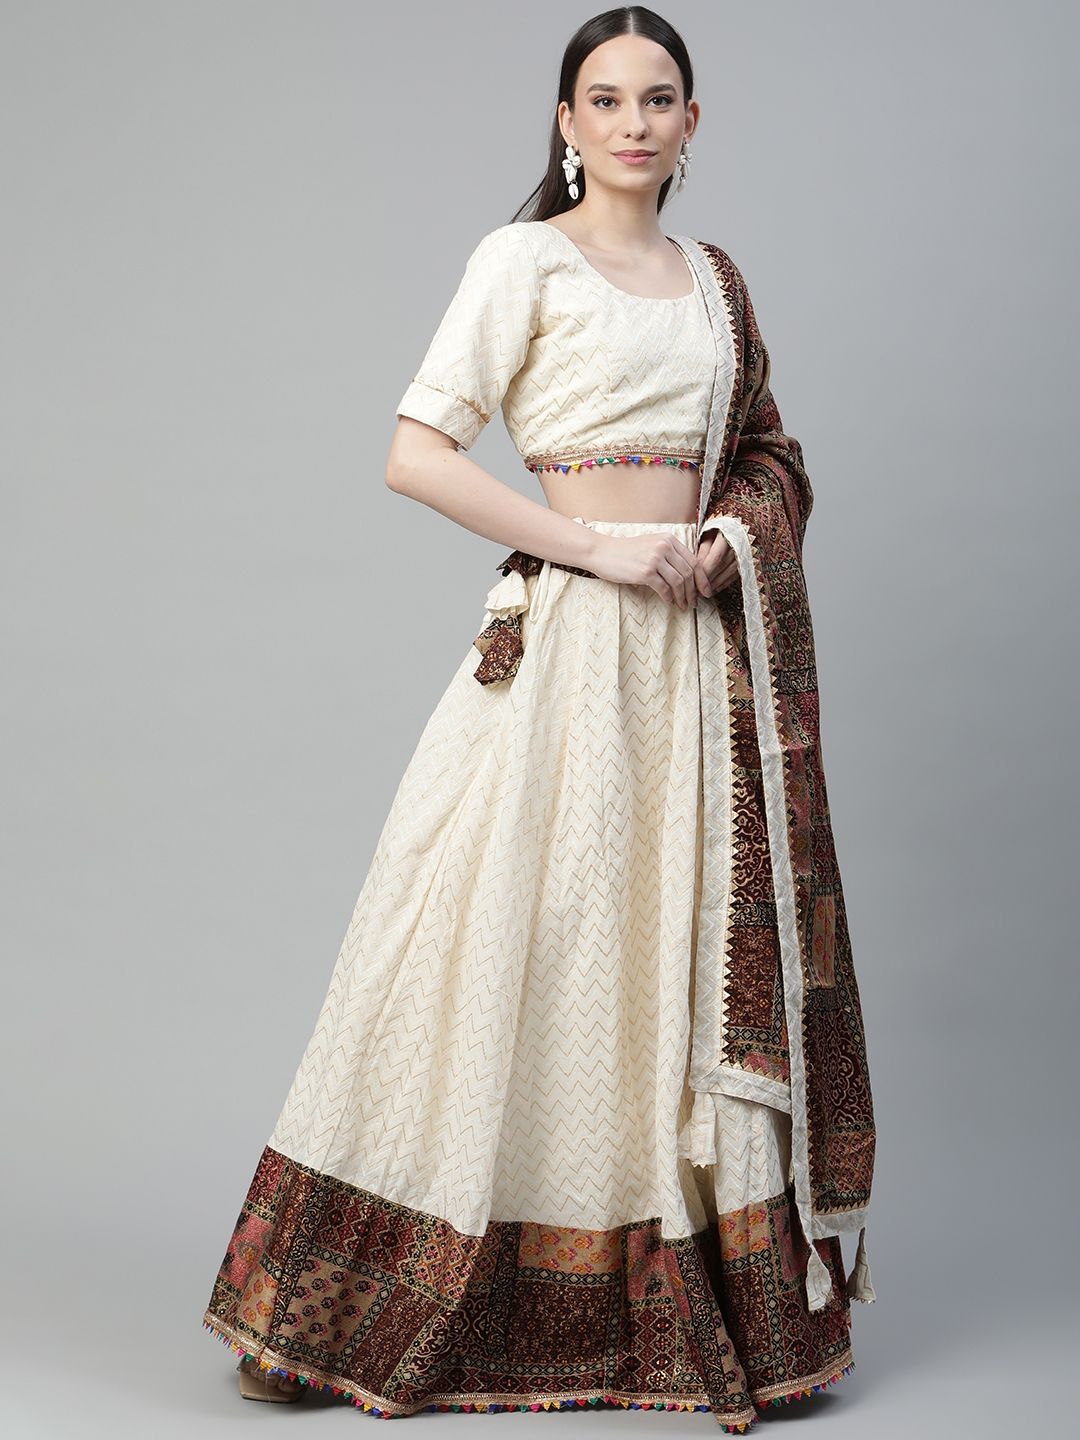 Readiprint Fashions Off White Embroidered Thread Work Kalamkari Semi-Stitched Lehenga & Unstitched Blouse Price in India